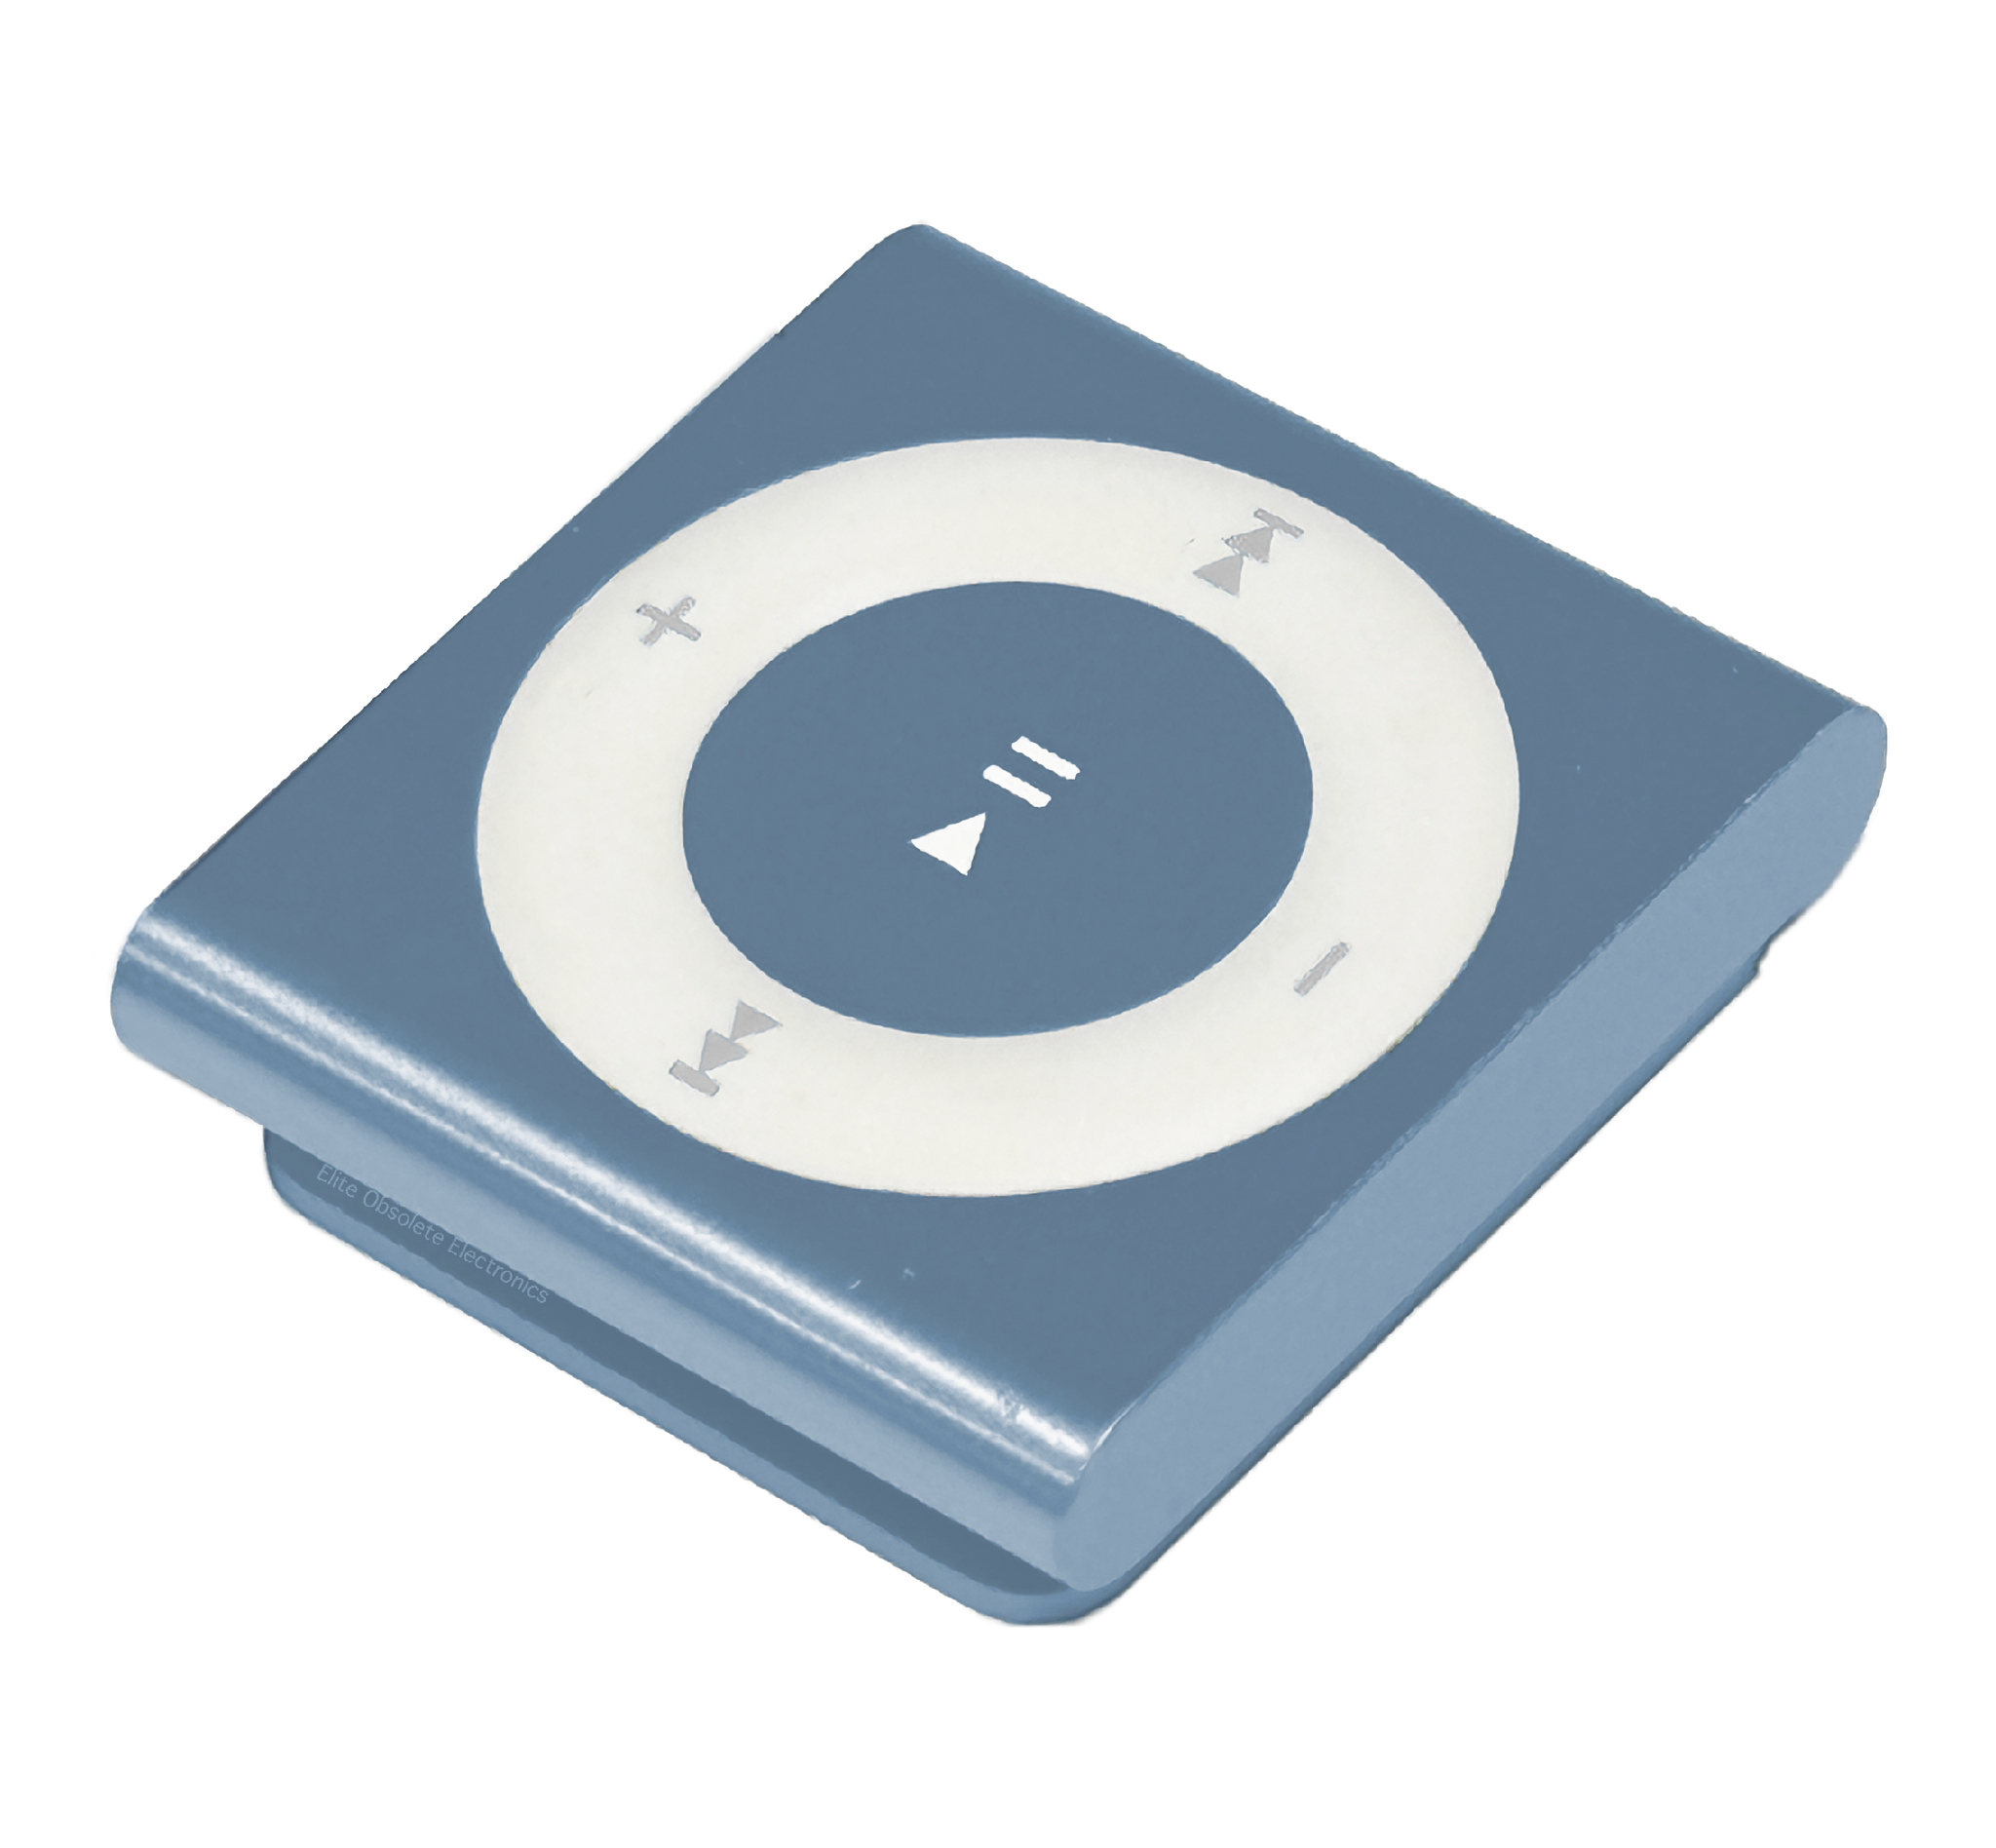 Refurbished Apple iPod Shuffle 4th Generation 2GB Light Blue A1373 New Battery